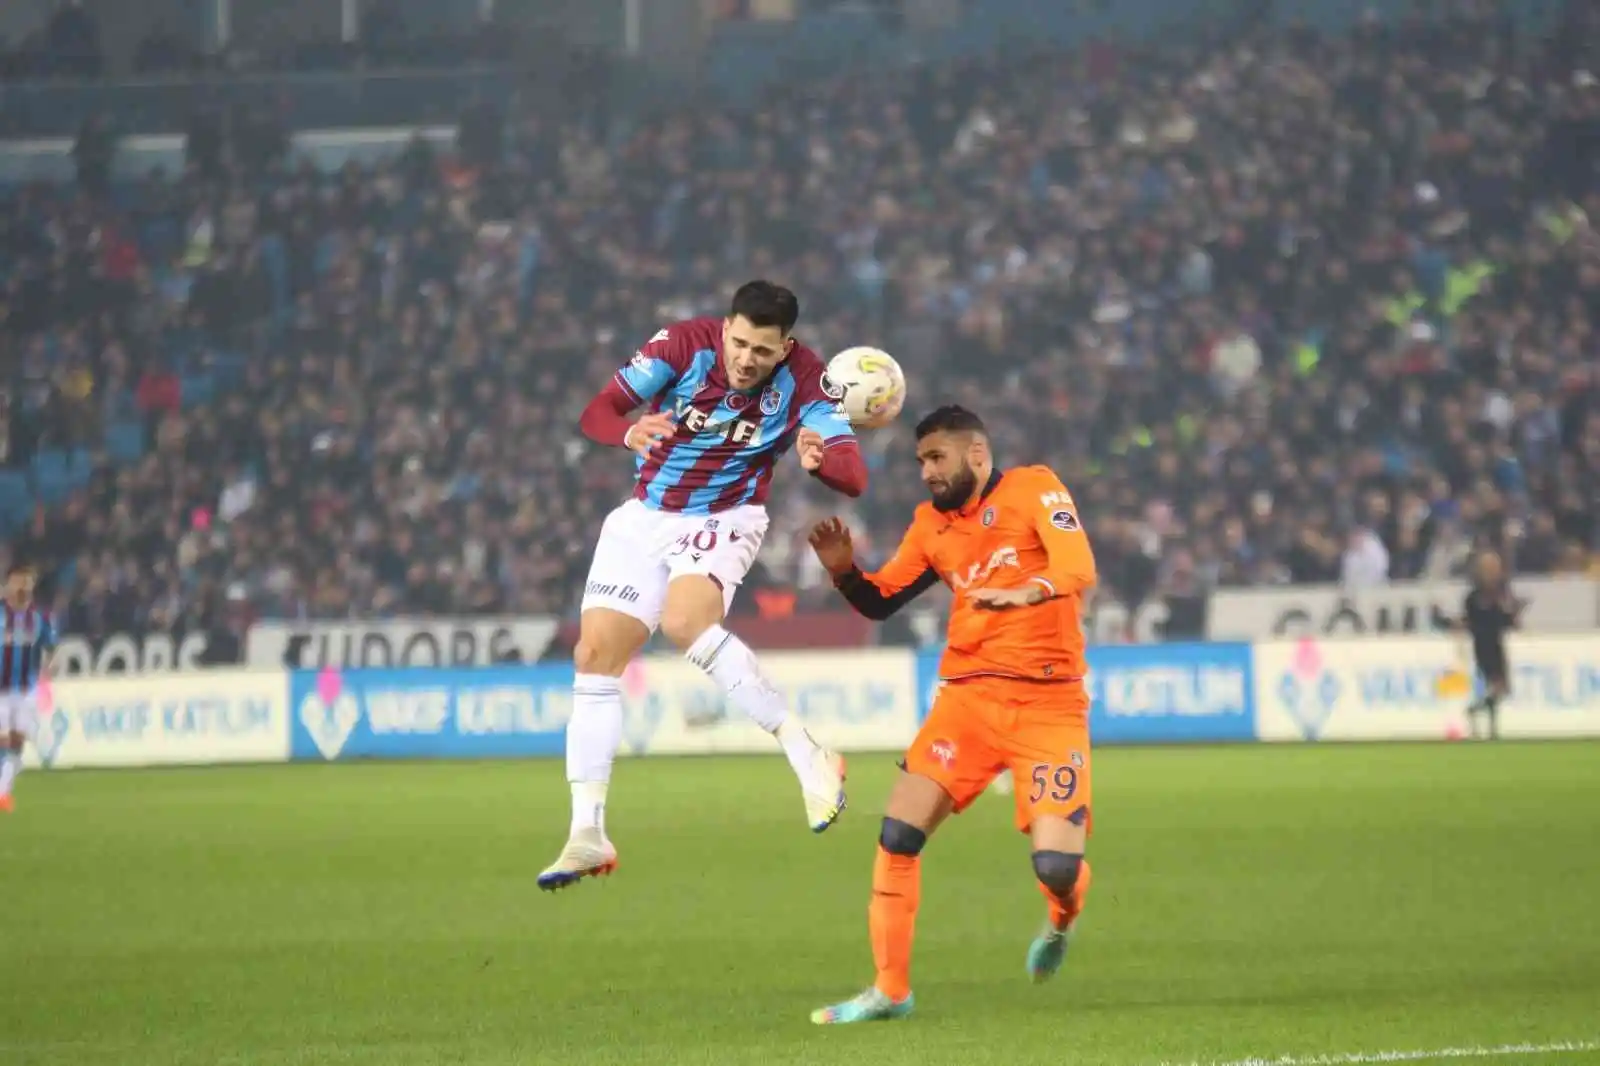 Spor Toto Süper Lig: Trabzonspor: 1 - Medipol Başakşehir: 0 (İlk yarı)
